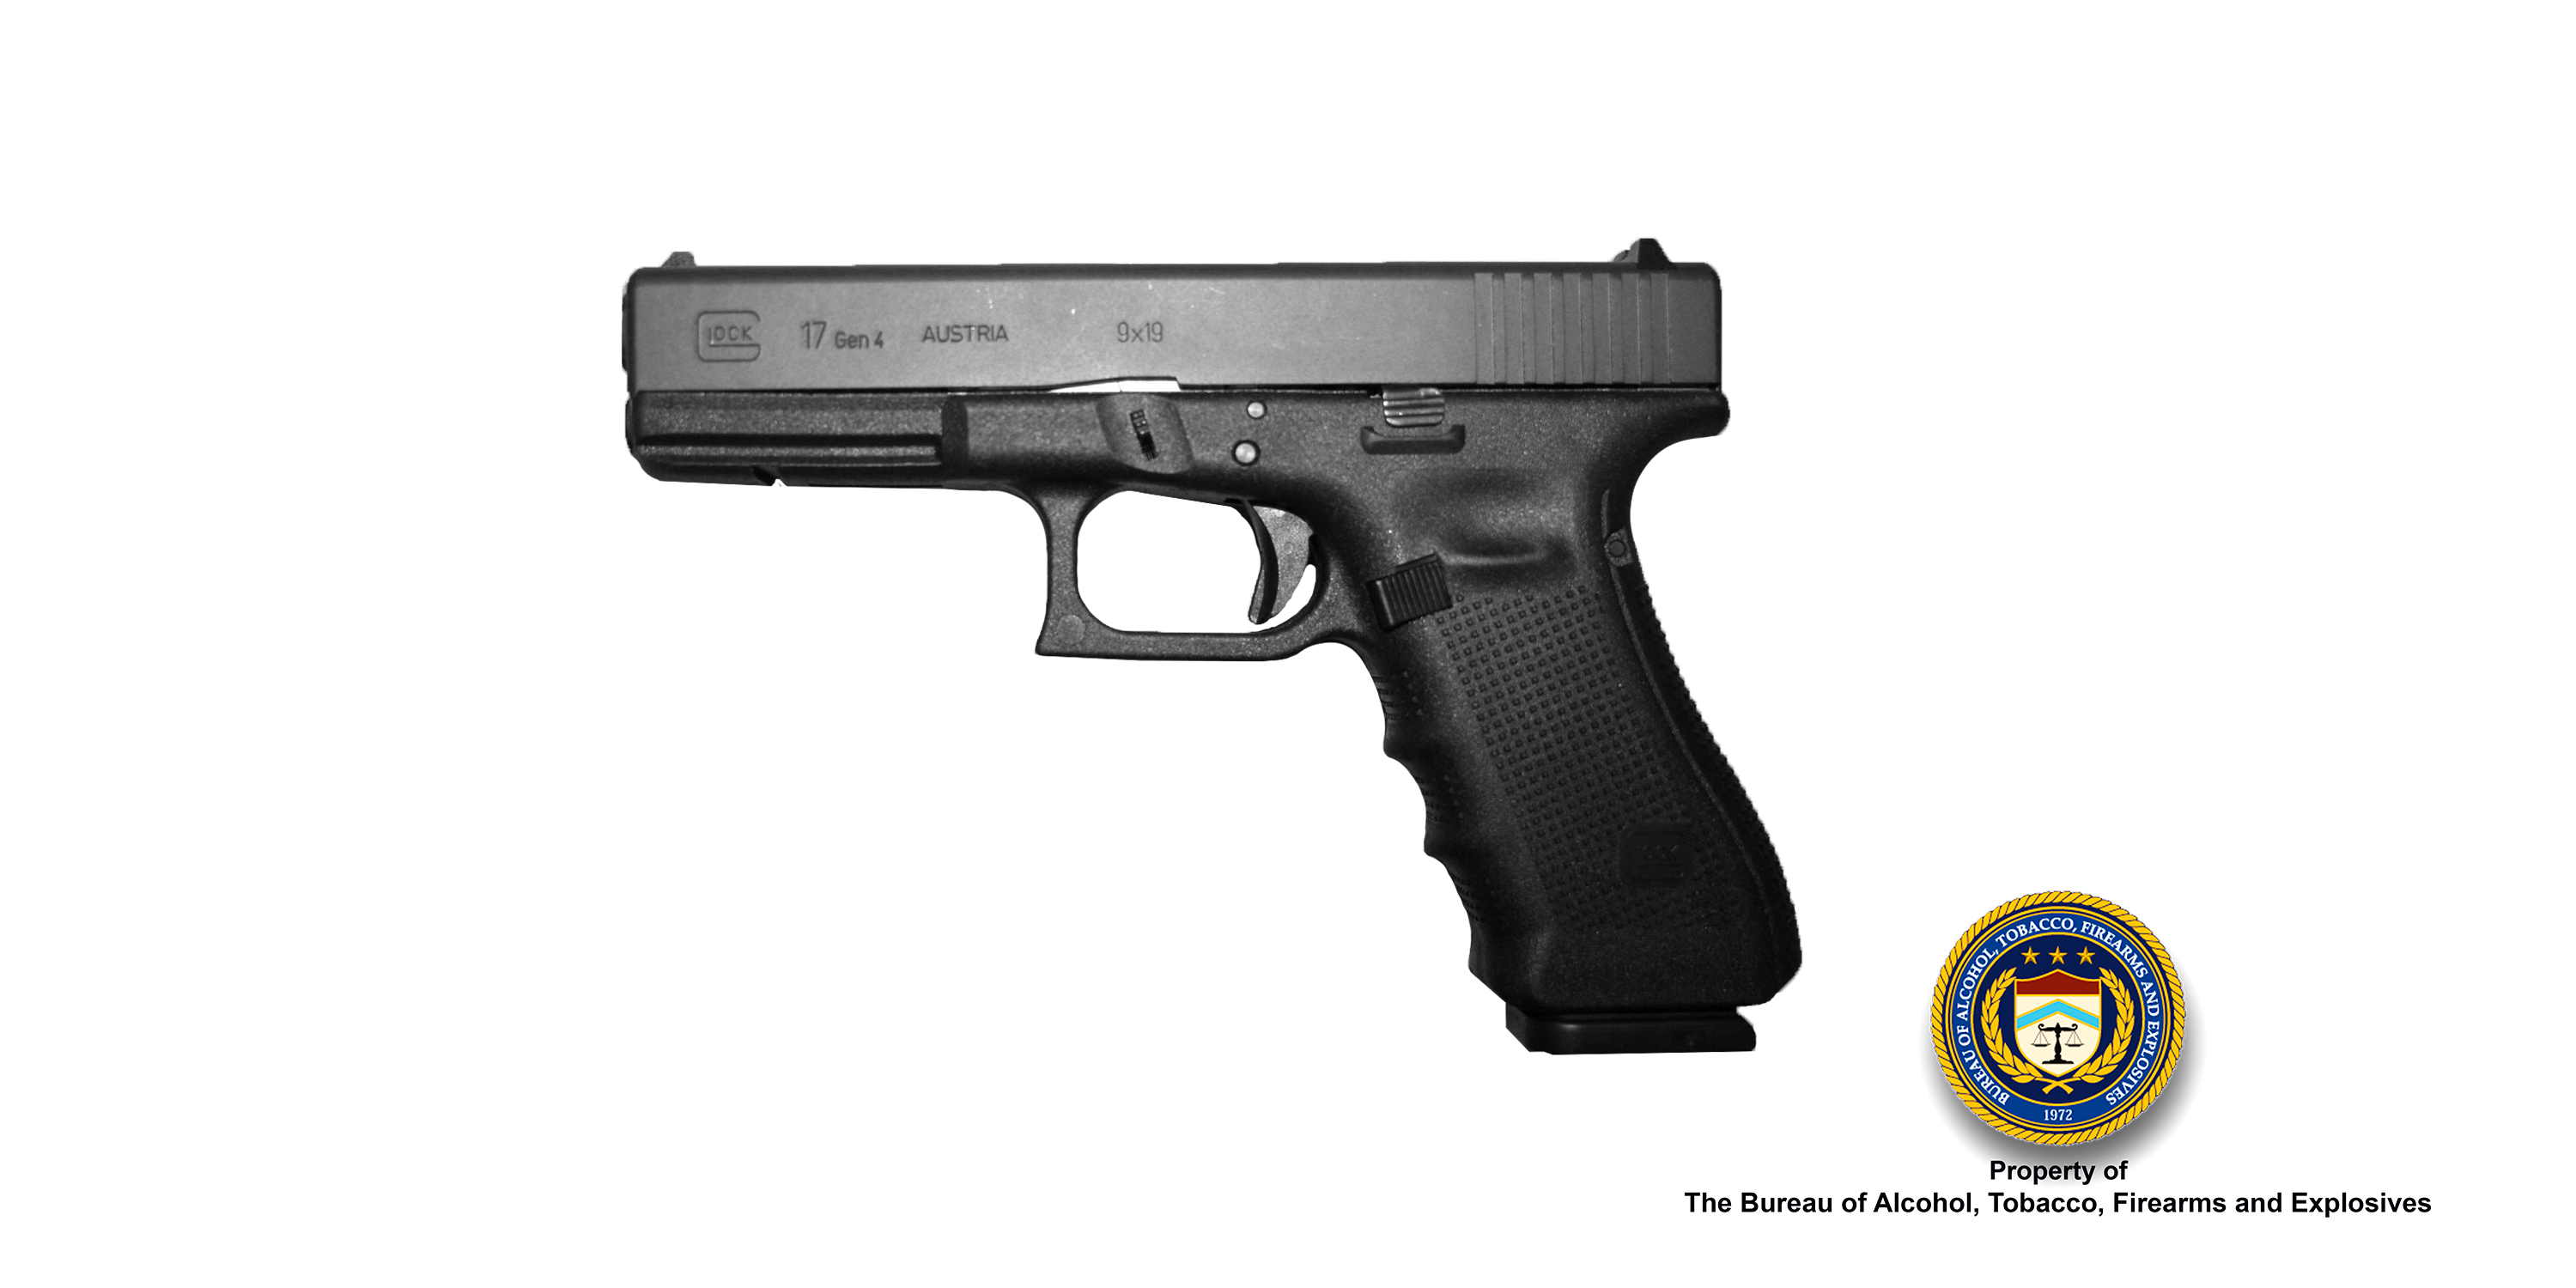 An image of a Glock Model 17 Semi-Automatic Pistol